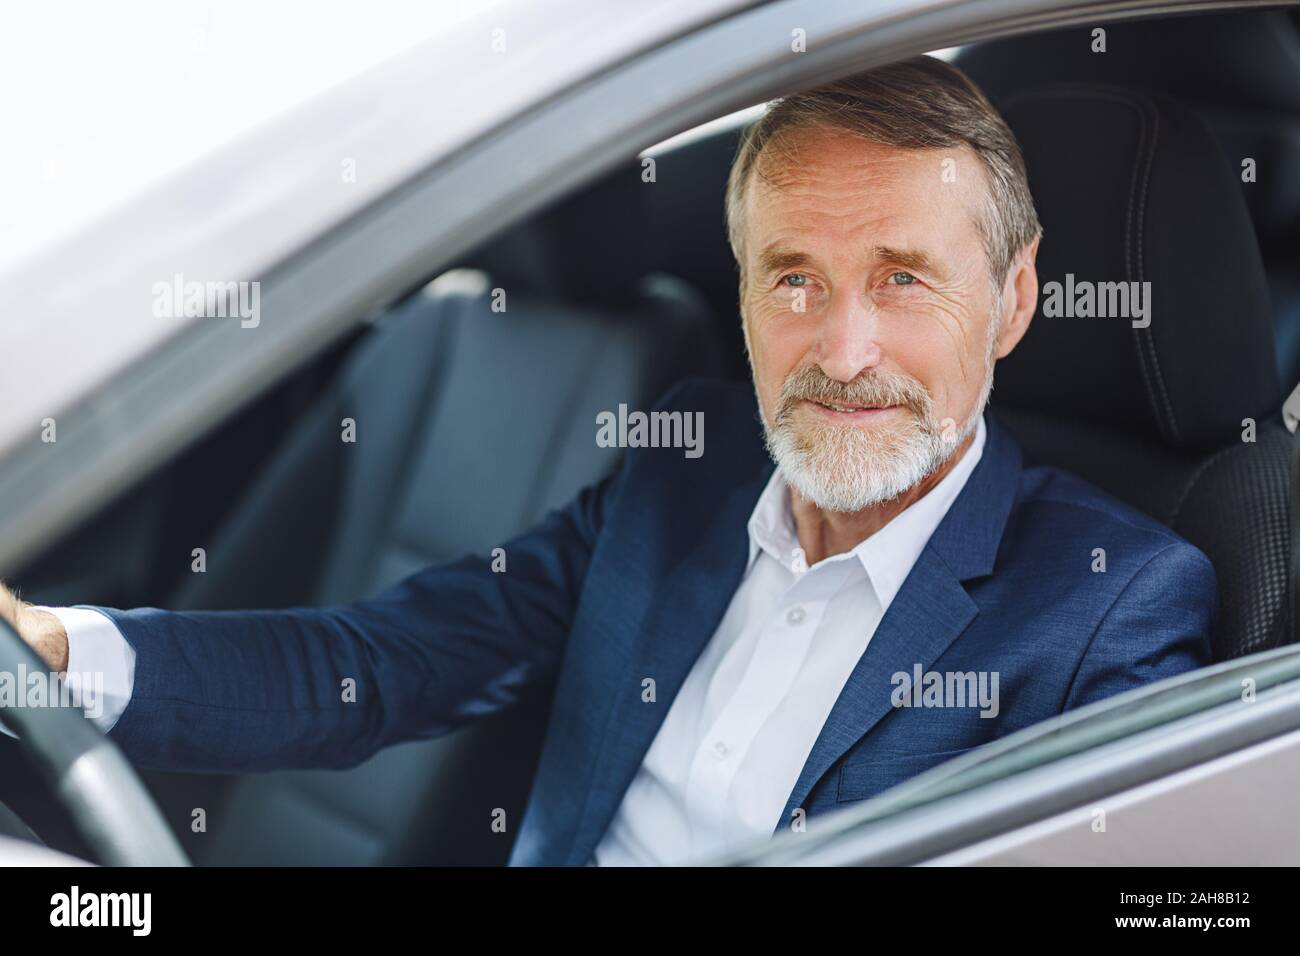 Senior driver sitting inside a car wearing formal wear Stock Photo